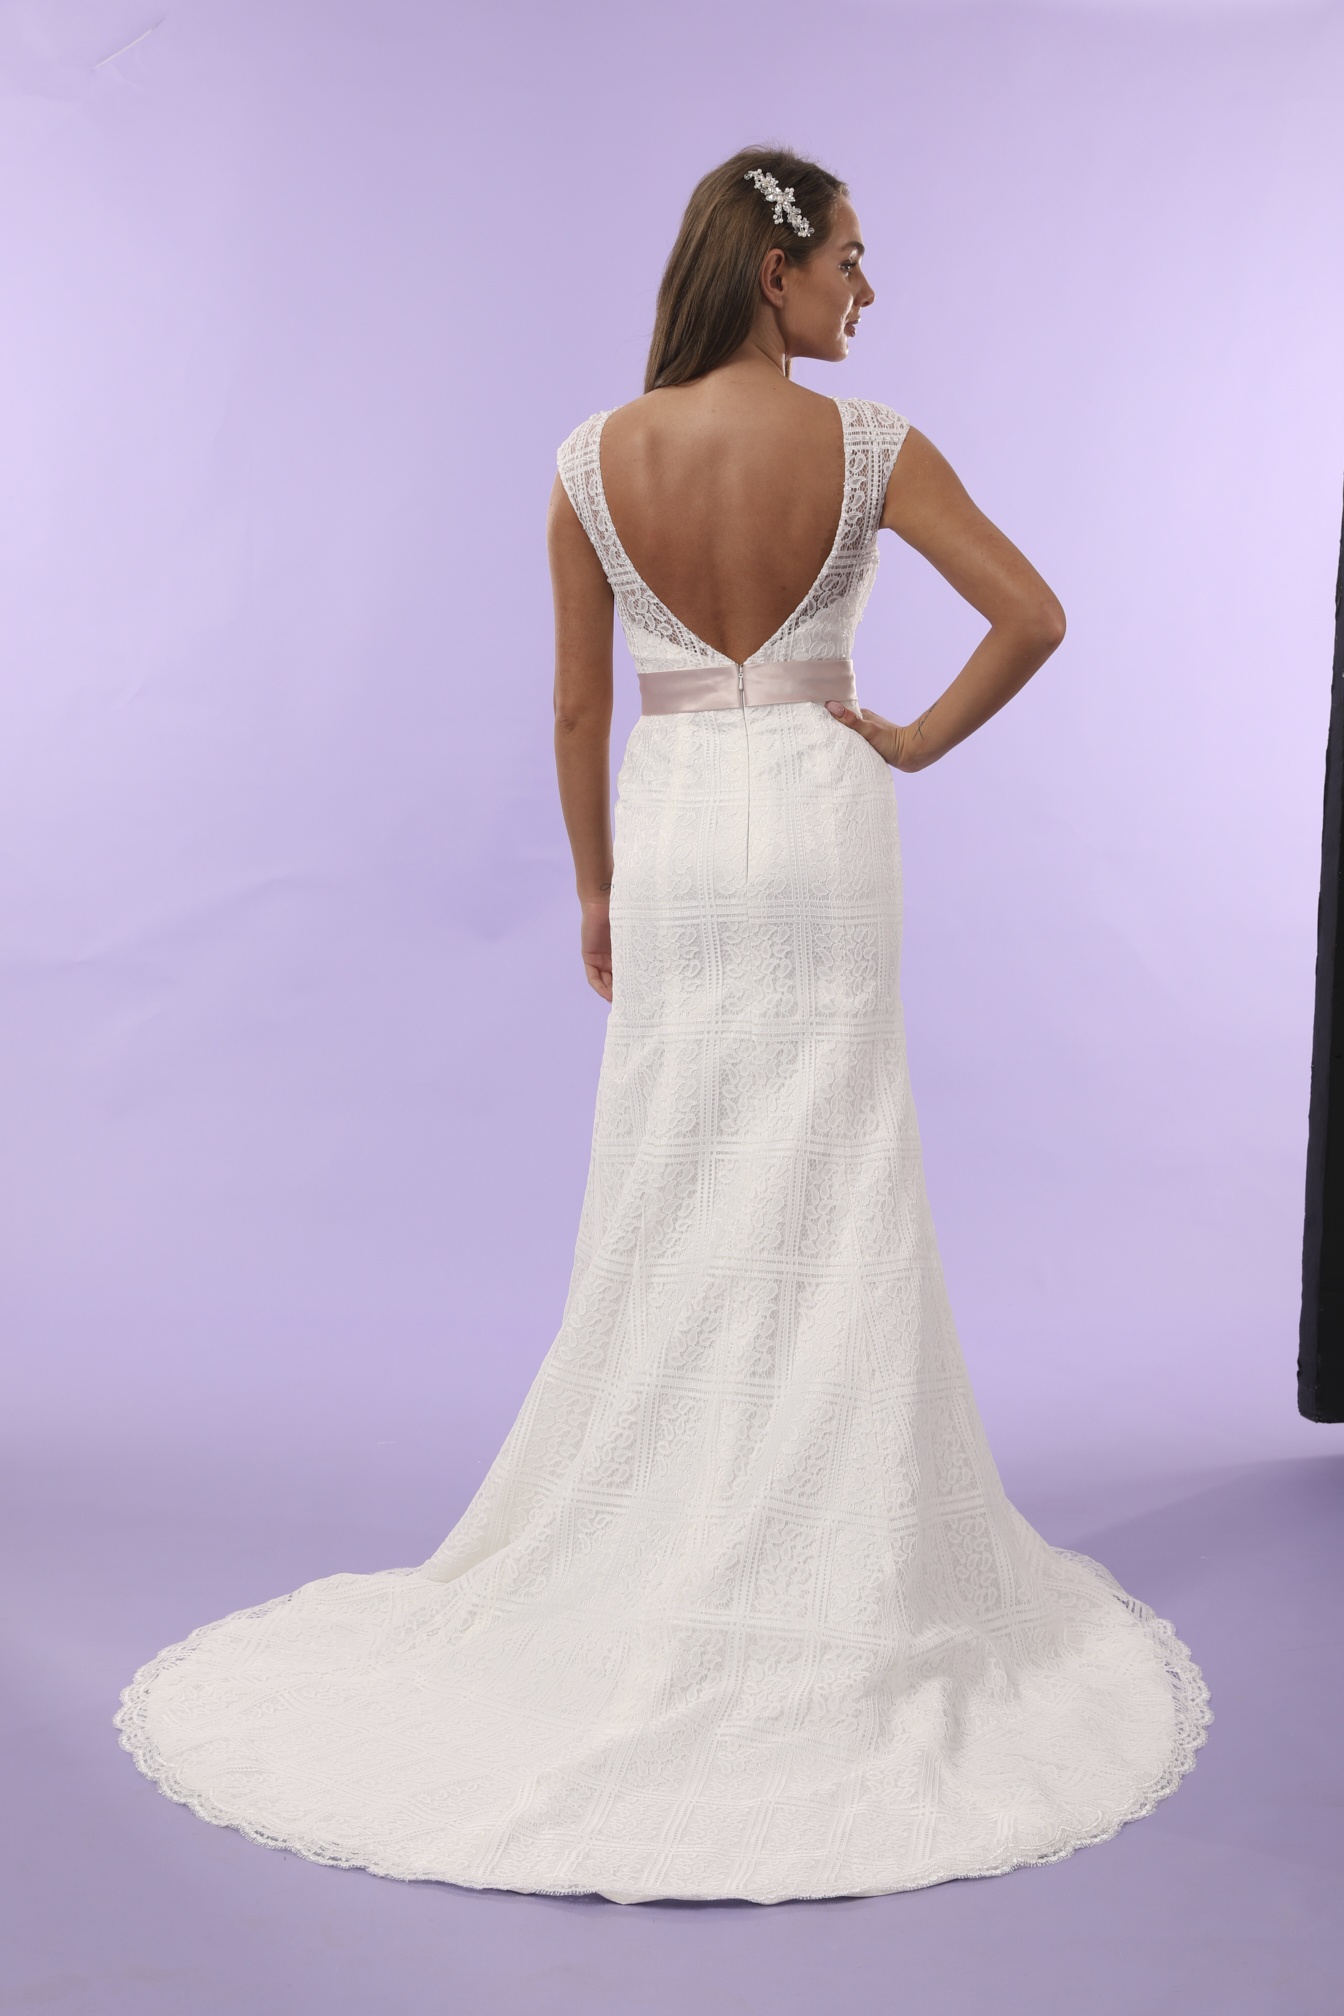 Harlow a modern lace sheath dress Wed4less Wedding Dress